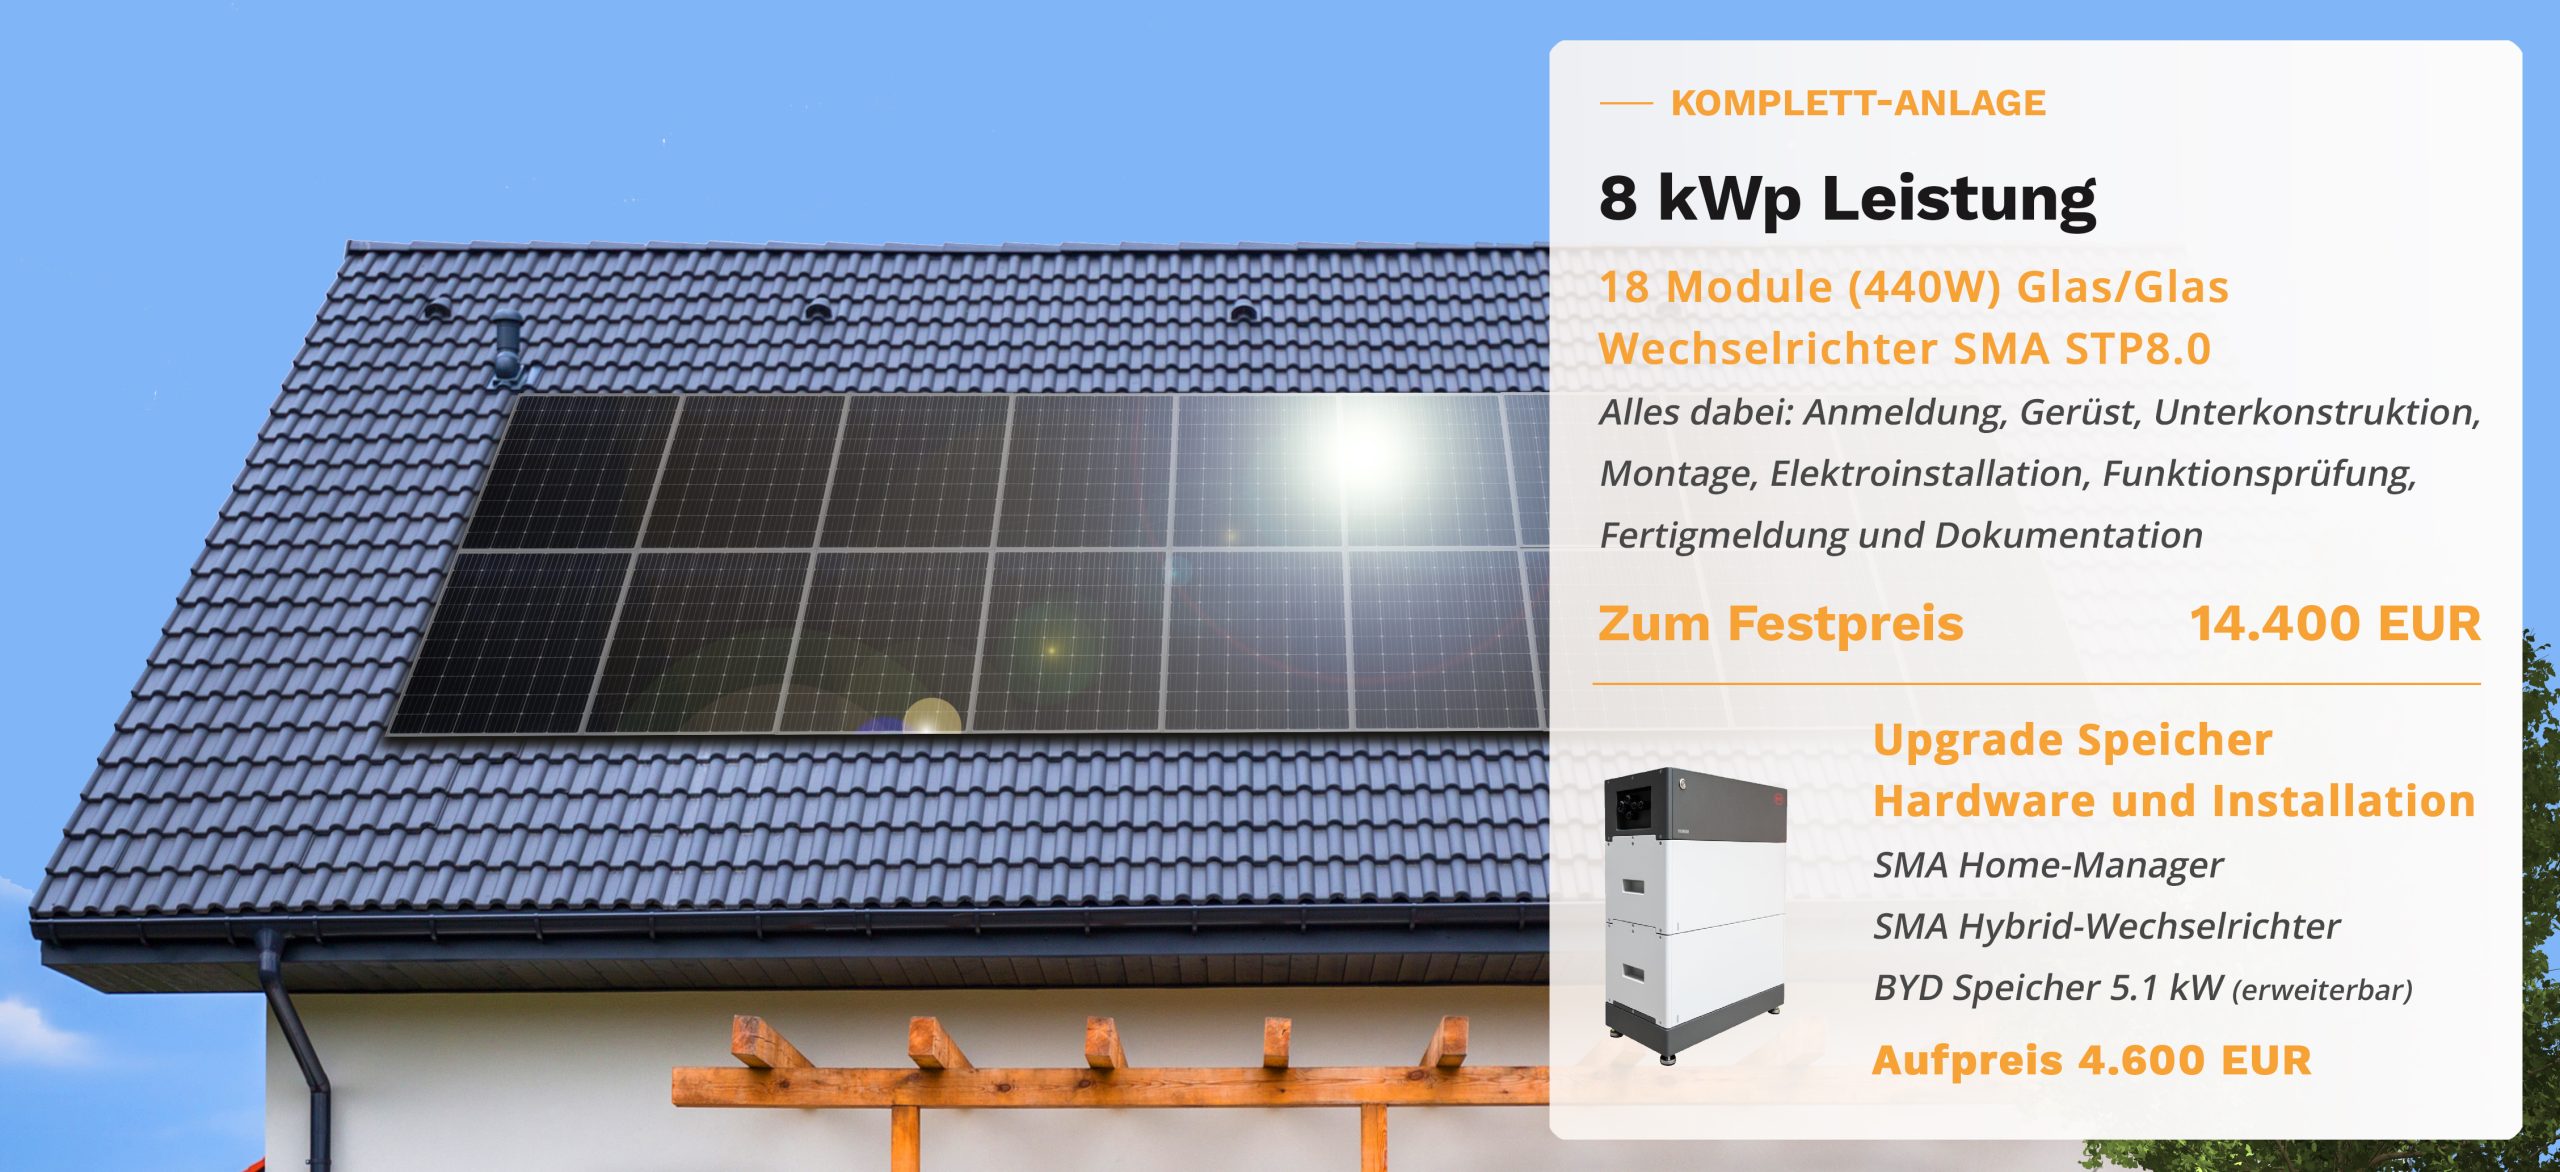 Eine 8kWp Photovoltaik Anlage kostet 14400 Euro